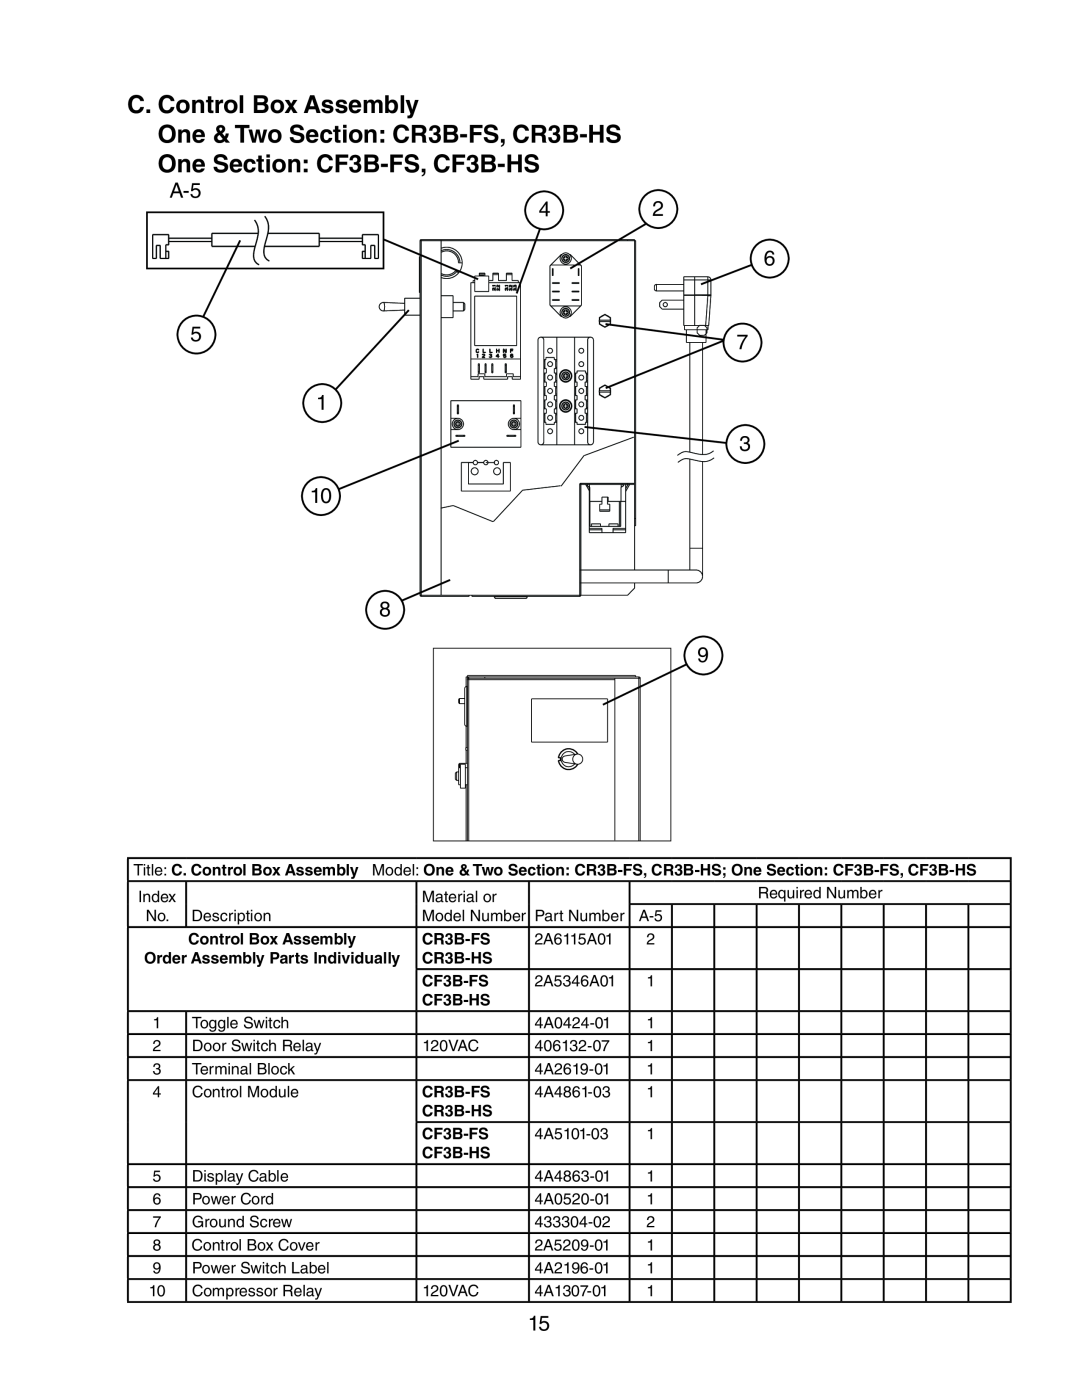 Hoshizaki manual C. Control Box Assembly, One & Two Section CR3B-FS, CR3B-HS, One Section CF3B-FS, CF3B-HS 